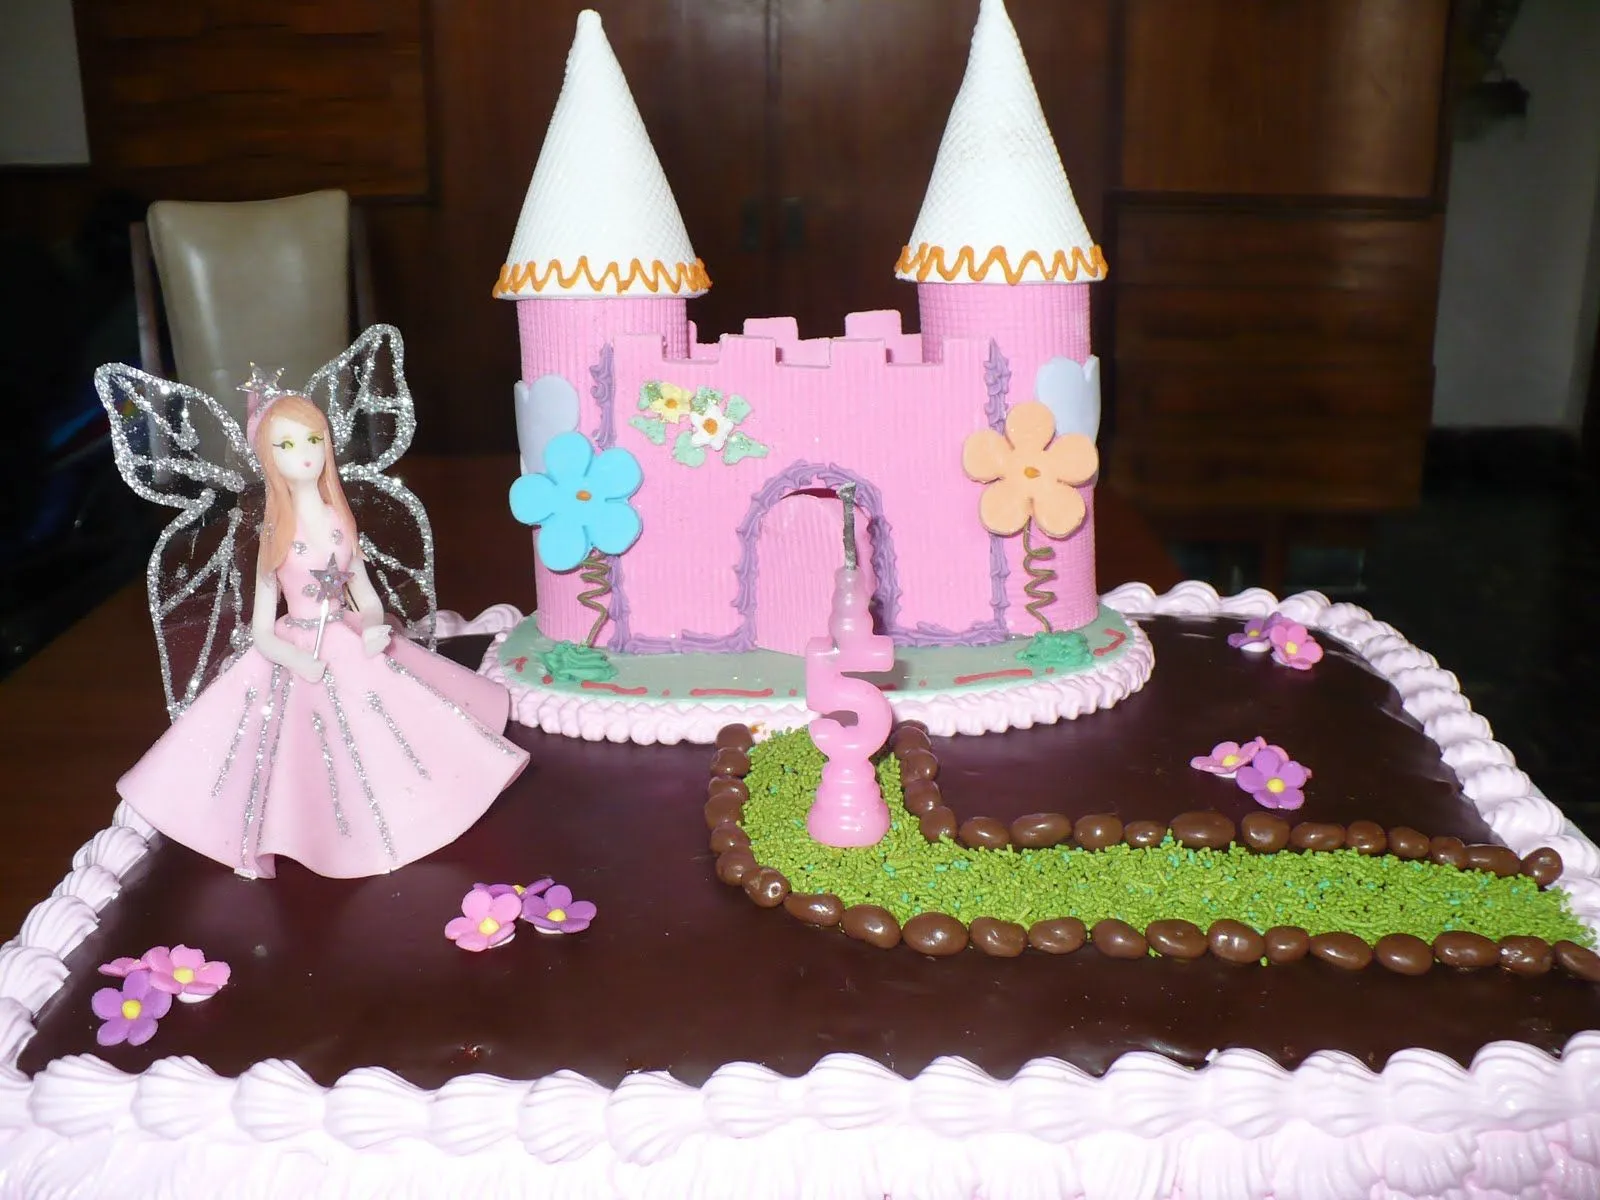 Torta de cumpleaños para niña - Imagui